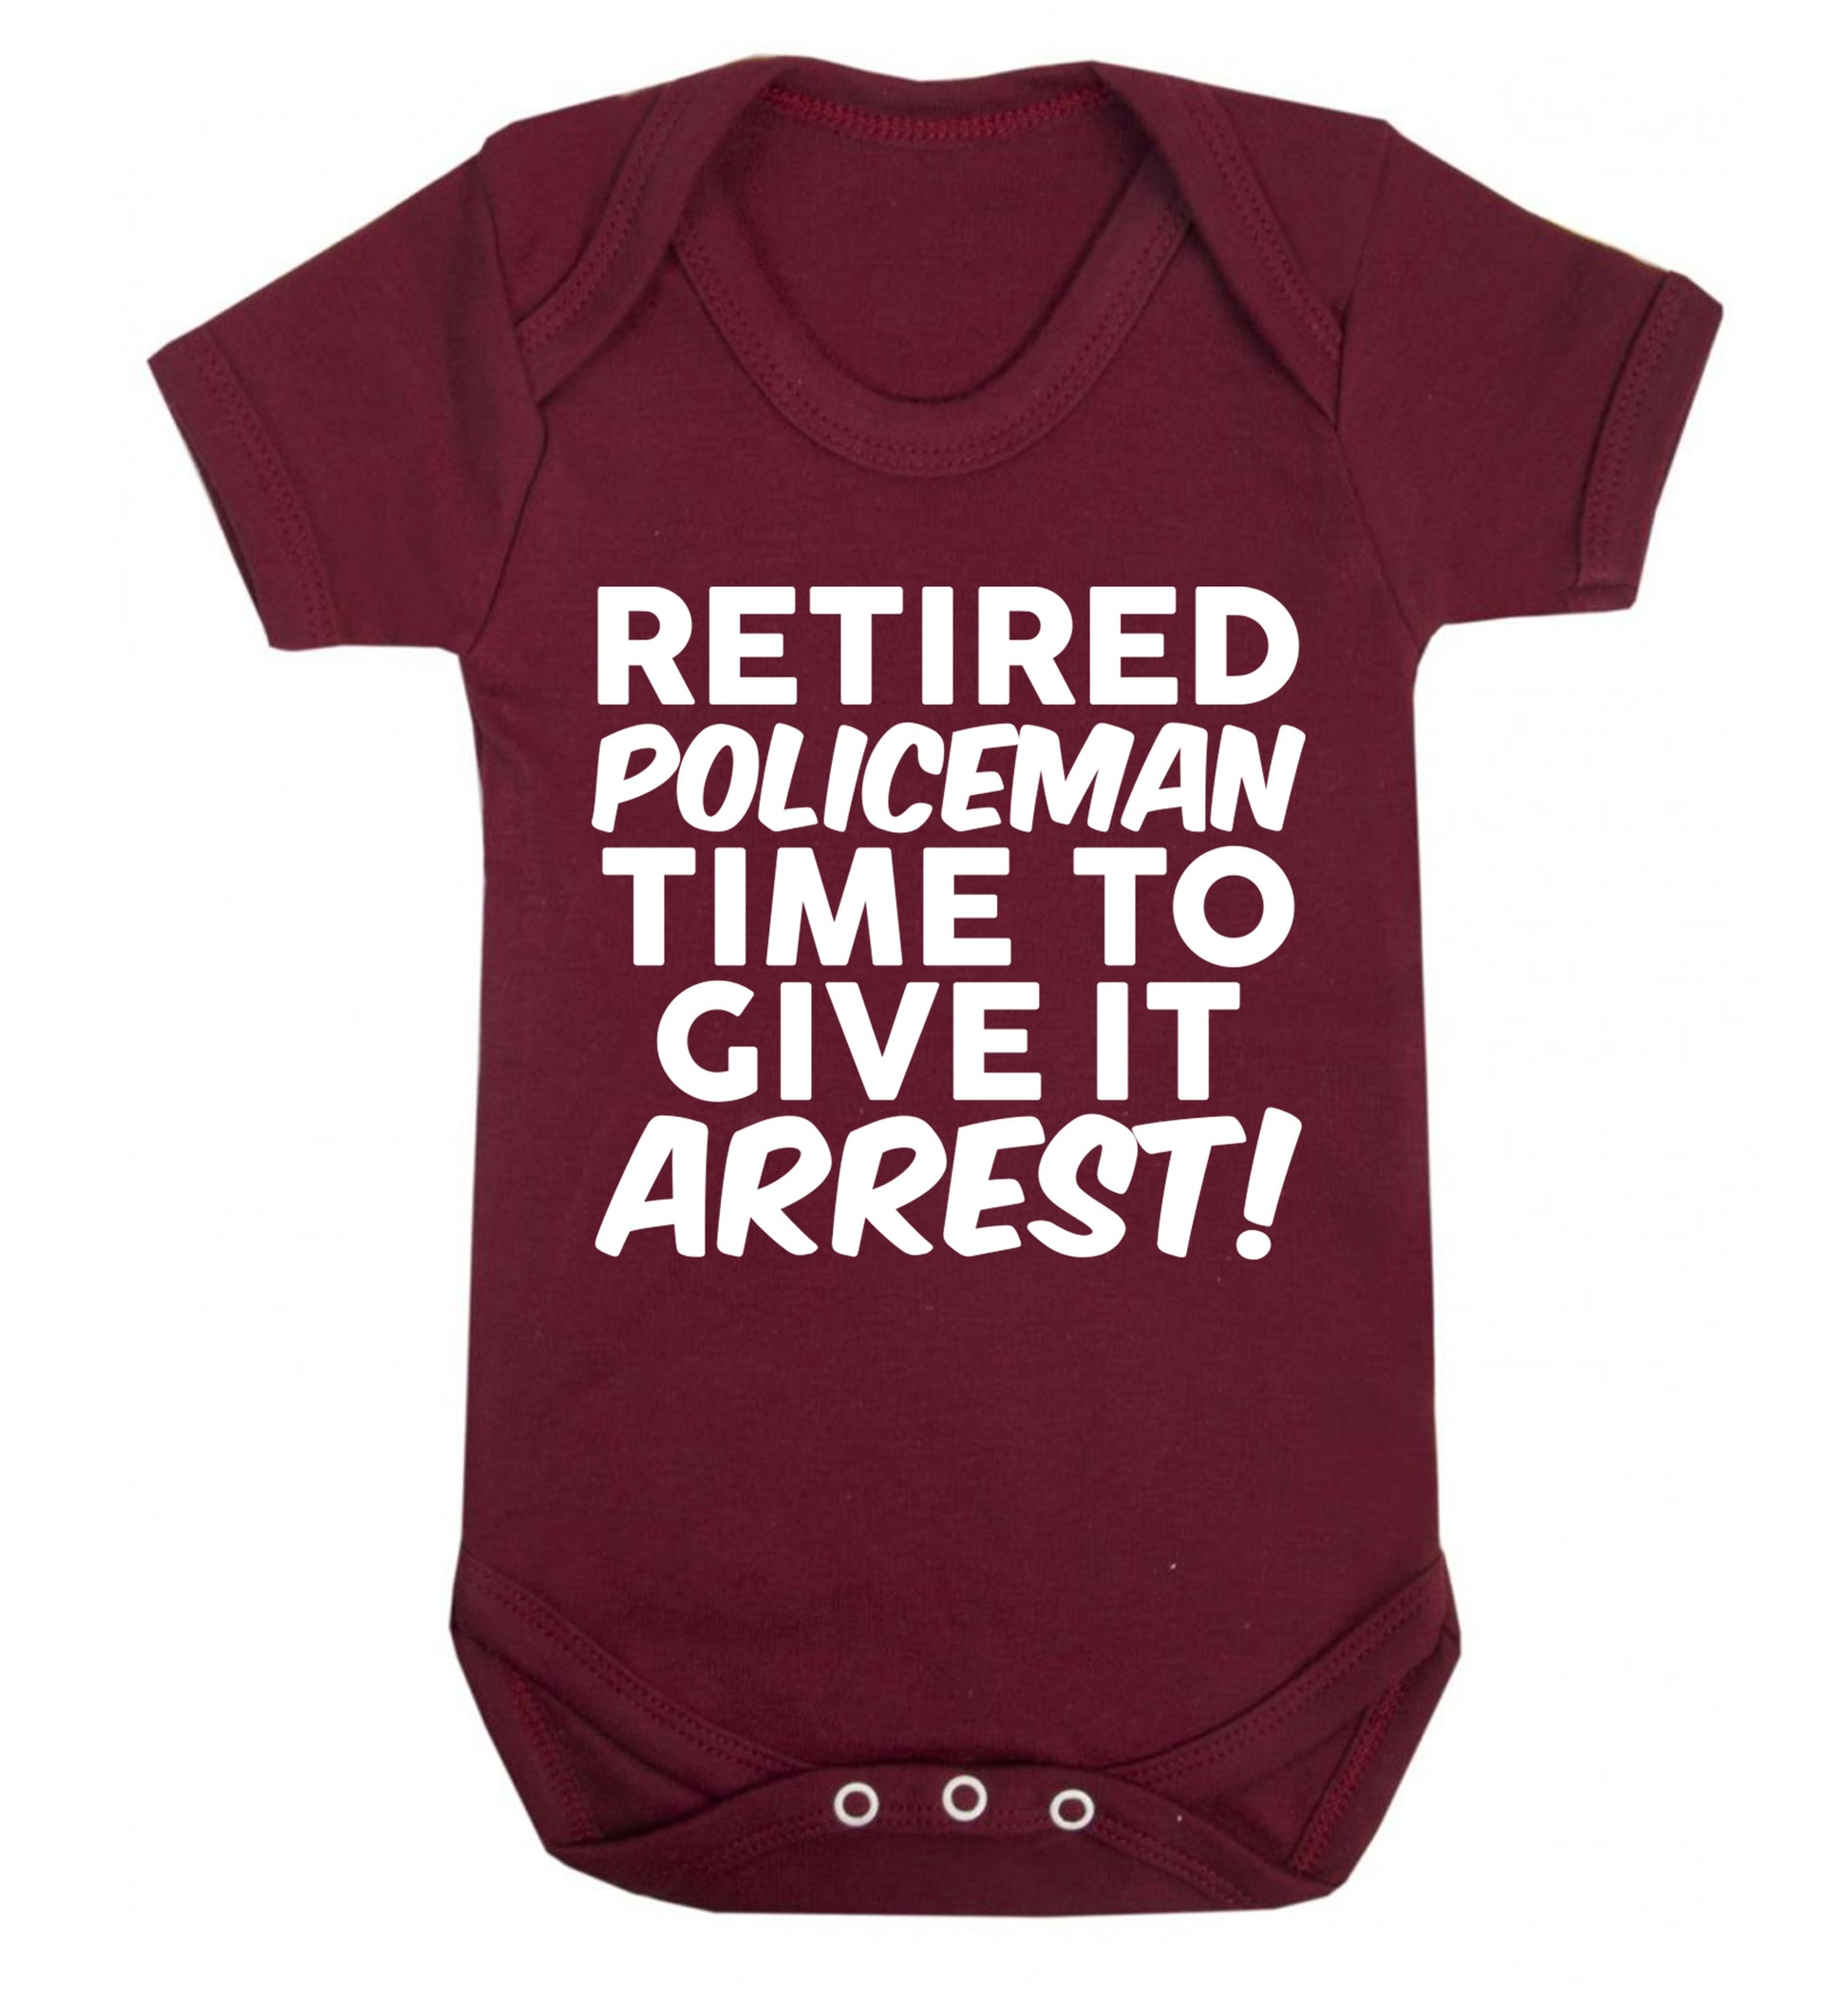 Retired policeman give it arresst! Baby Vest maroon 18-24 months